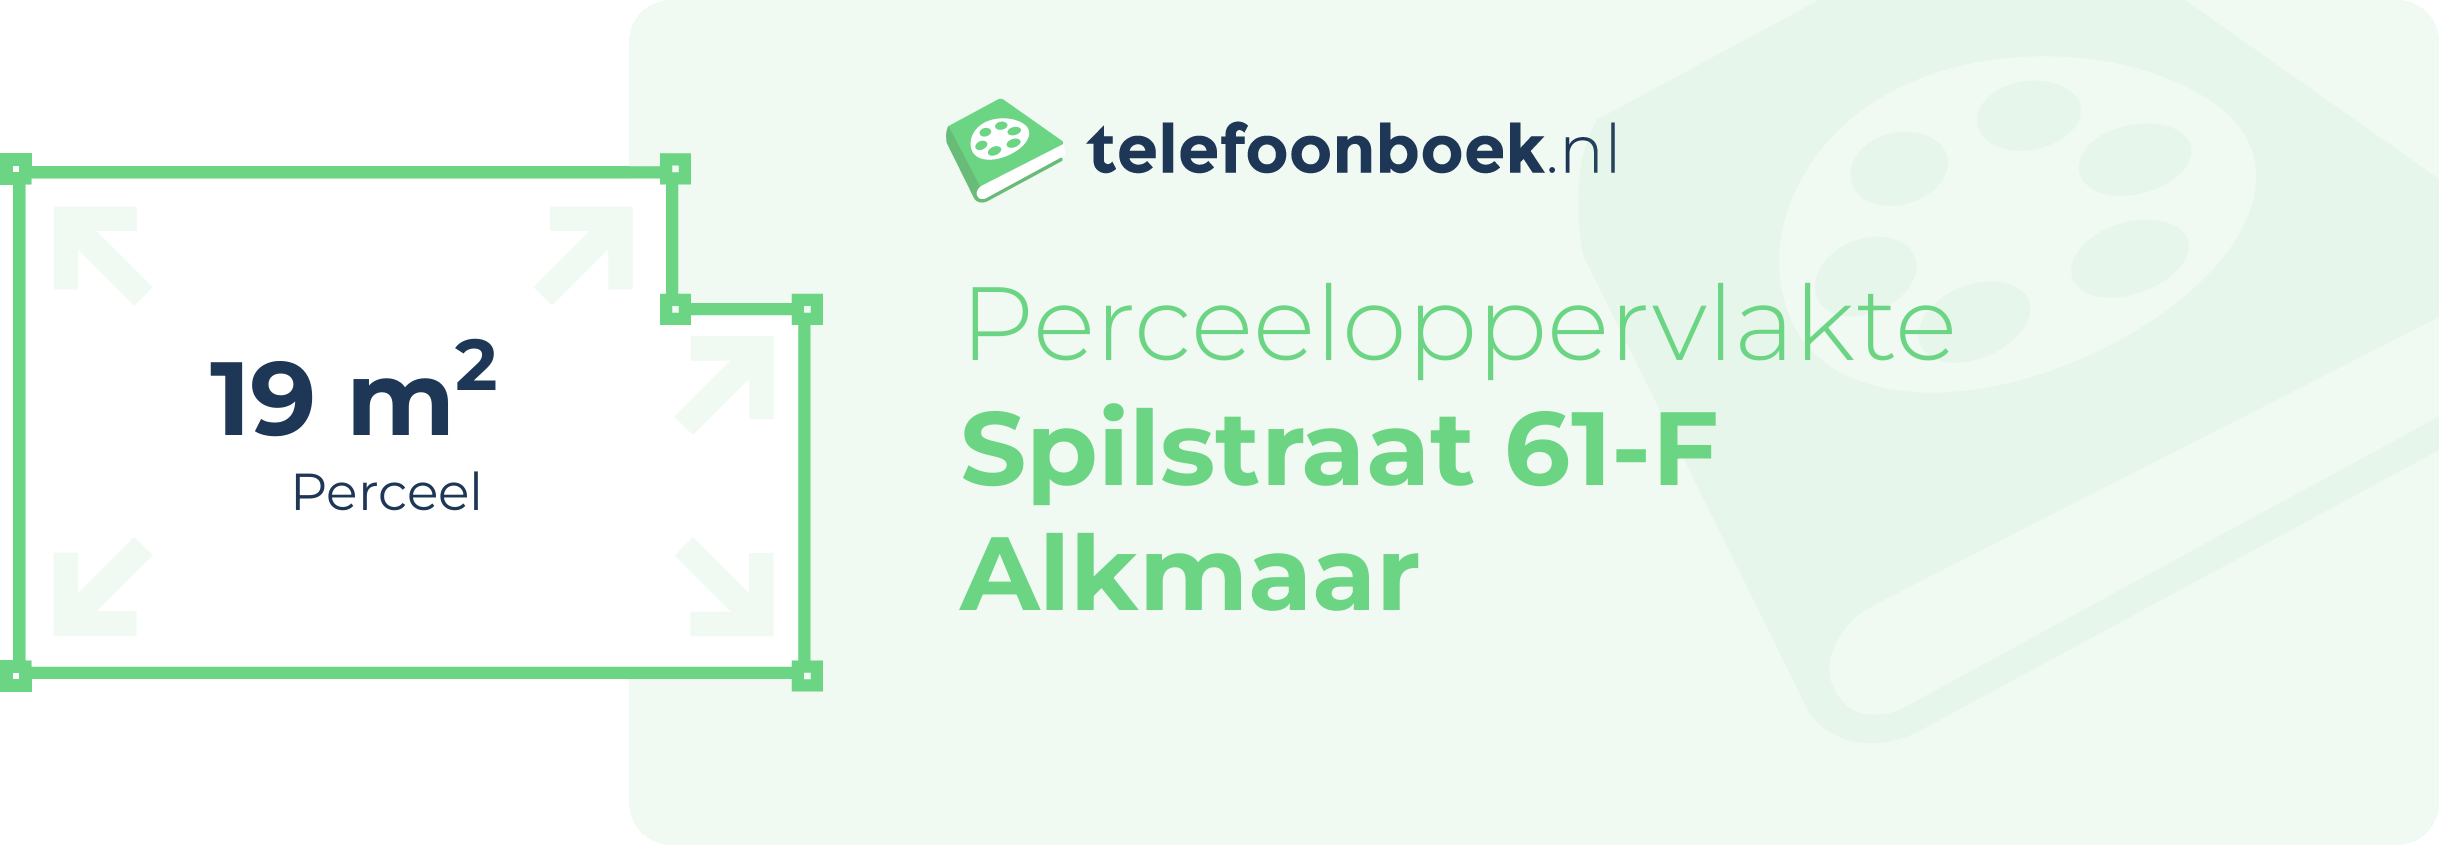 Perceeloppervlakte Spilstraat 61-F Alkmaar